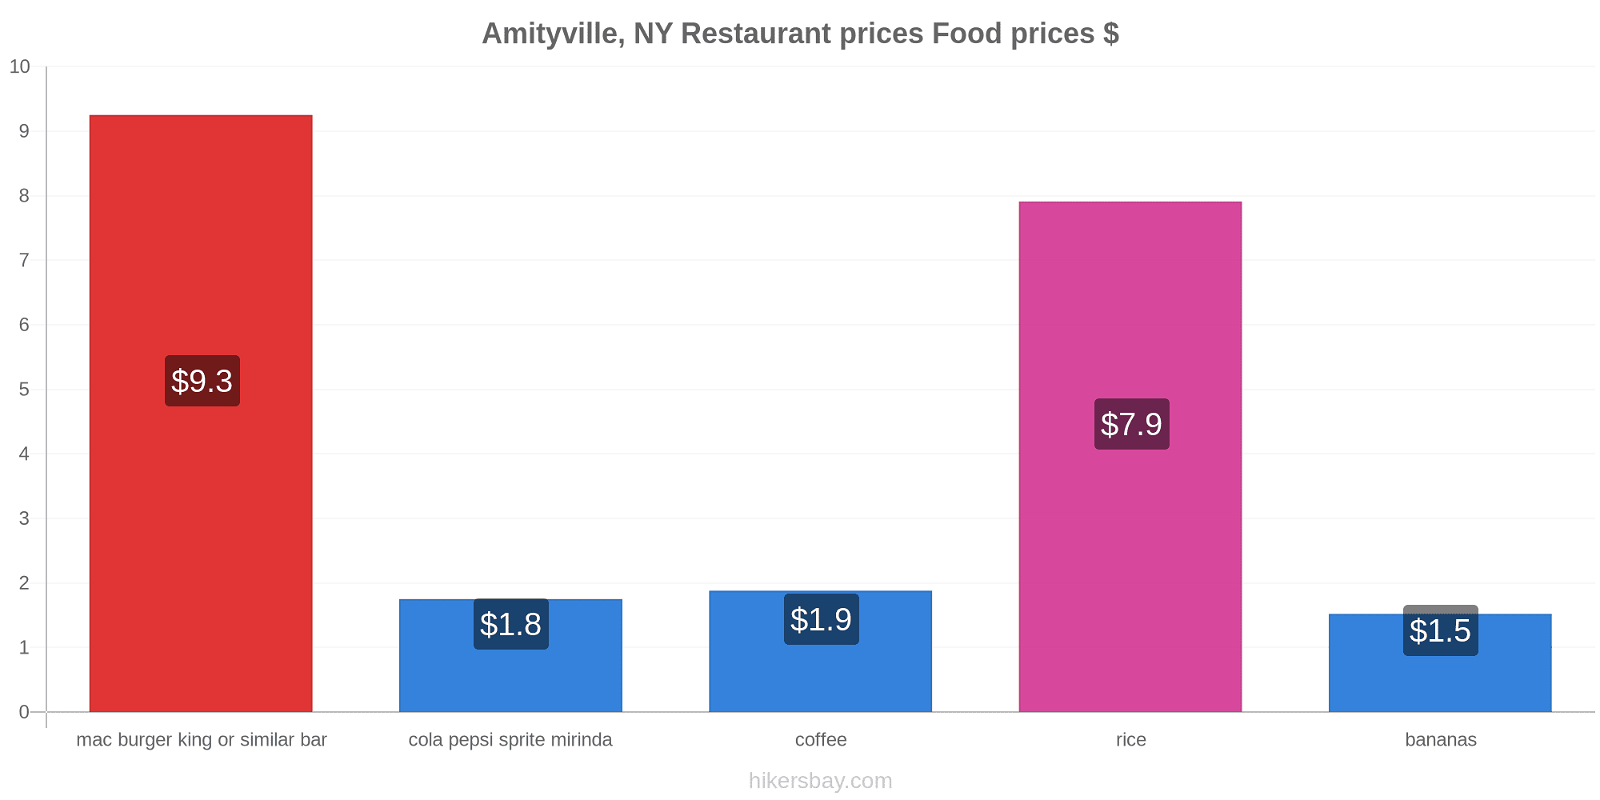 Amityville, NY price changes hikersbay.com